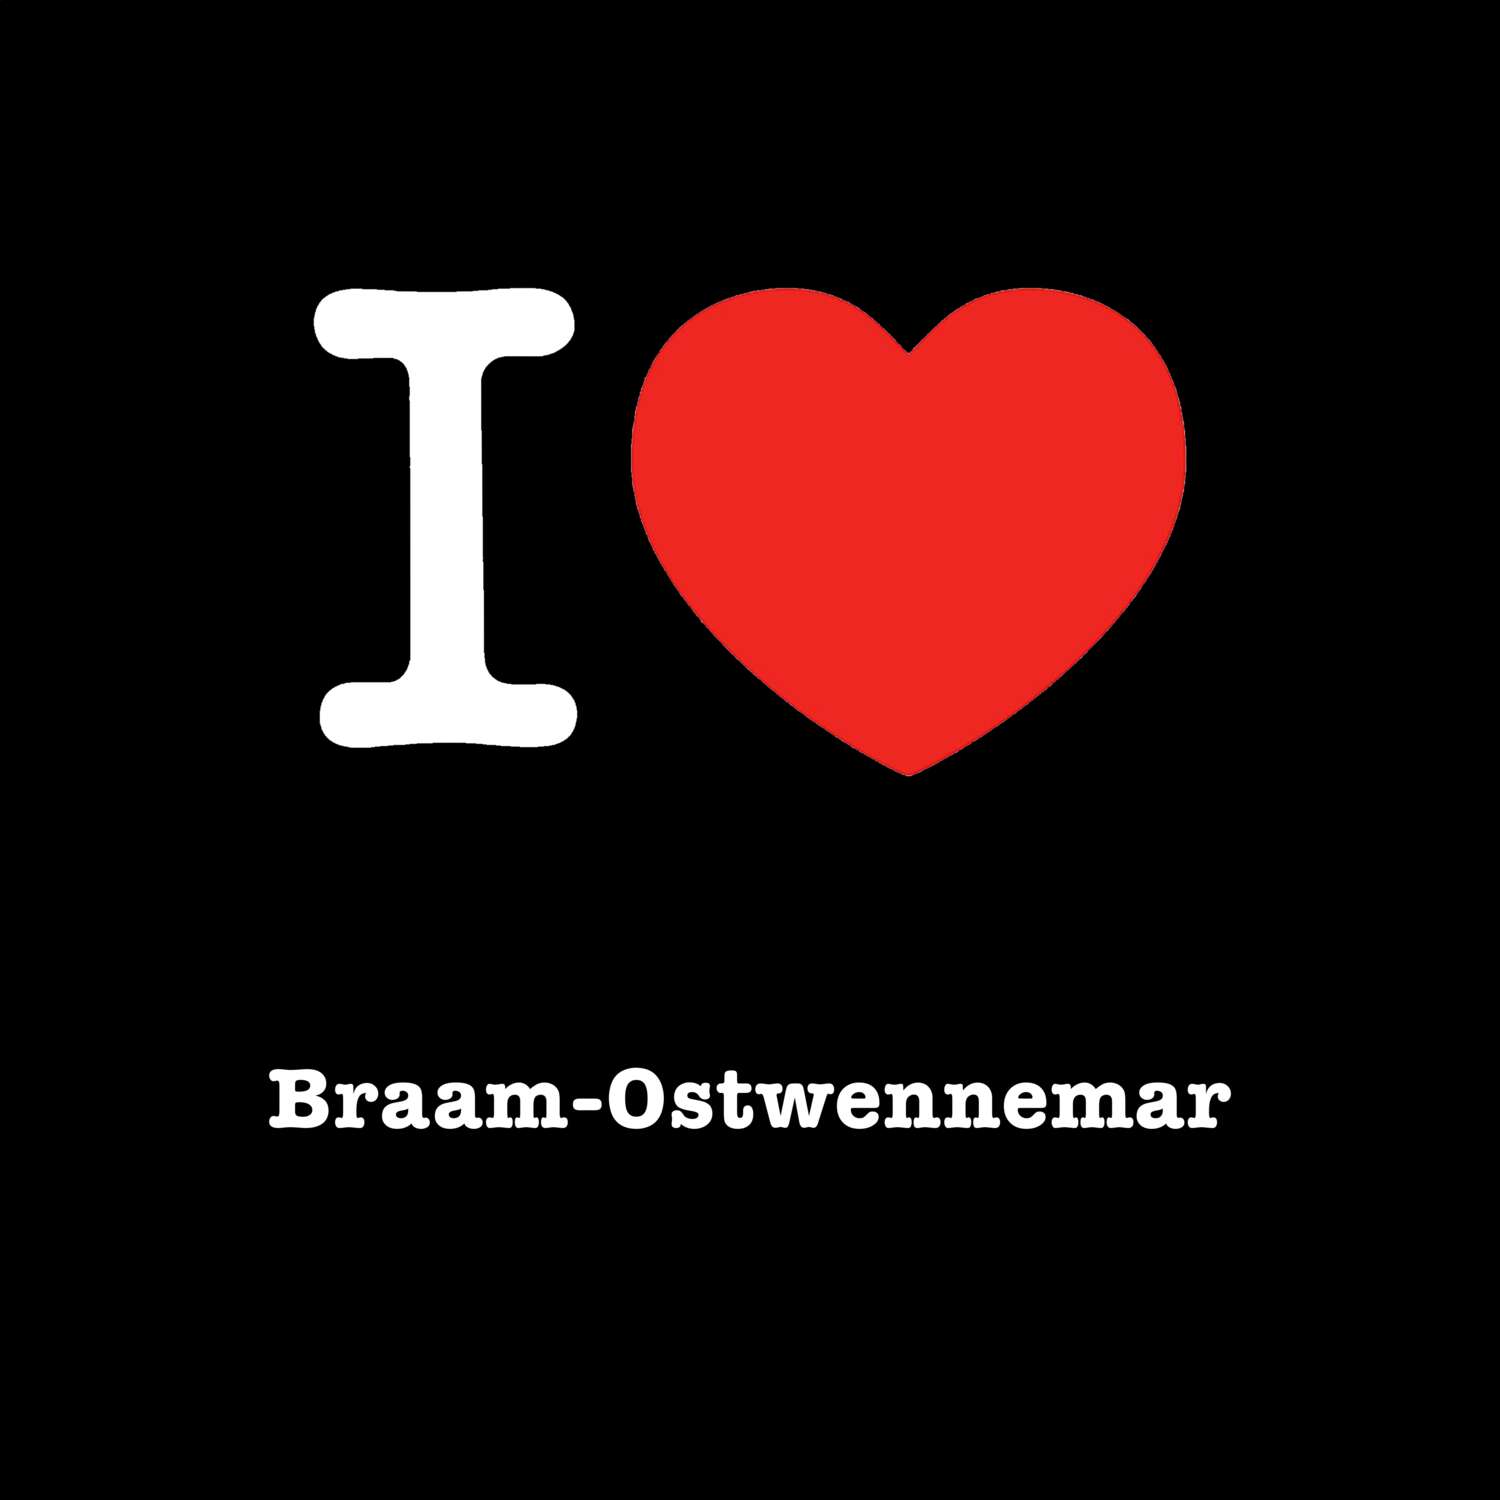 Braam-Ostwennemar T-Shirt »I love«